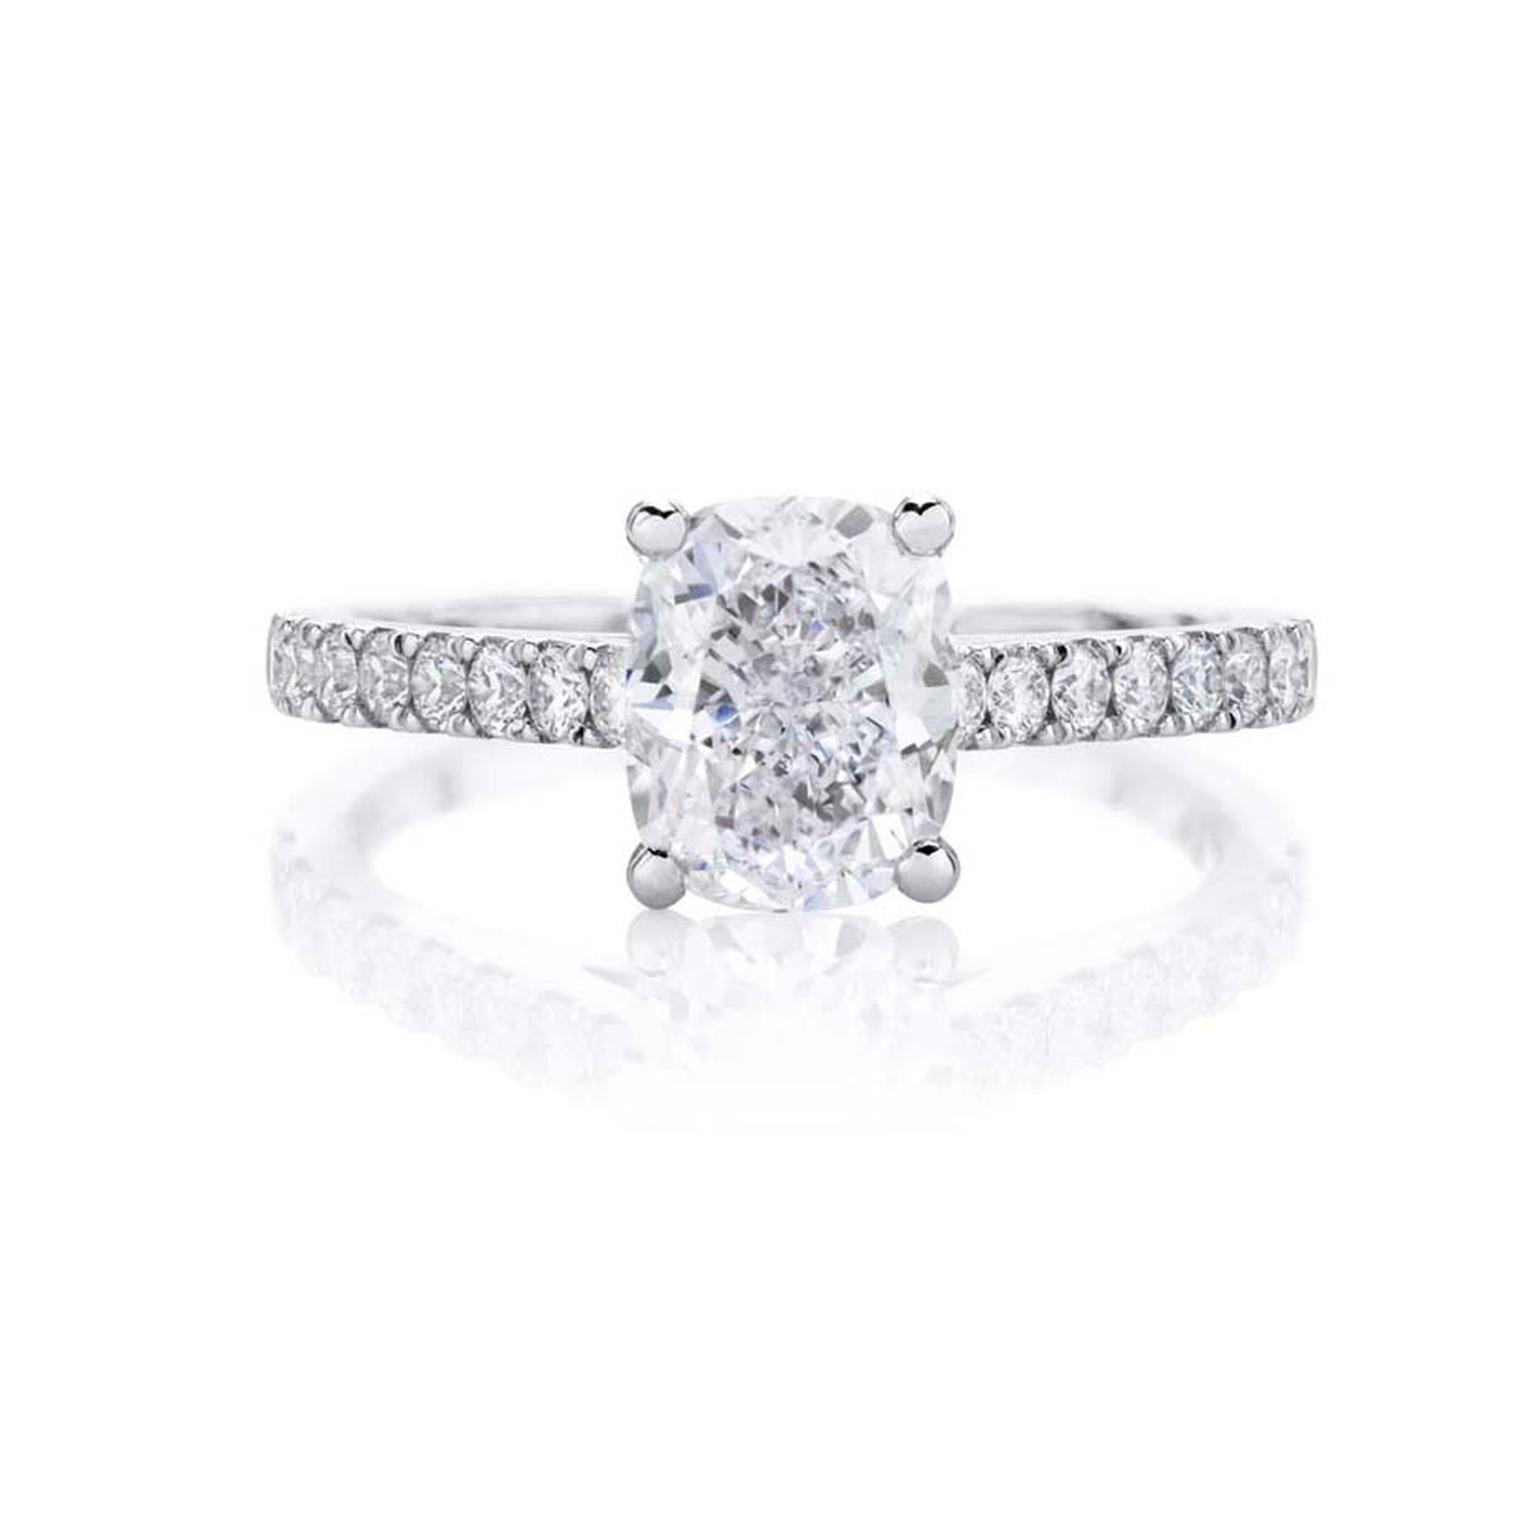 De Beers Classic diamond engagement ring.